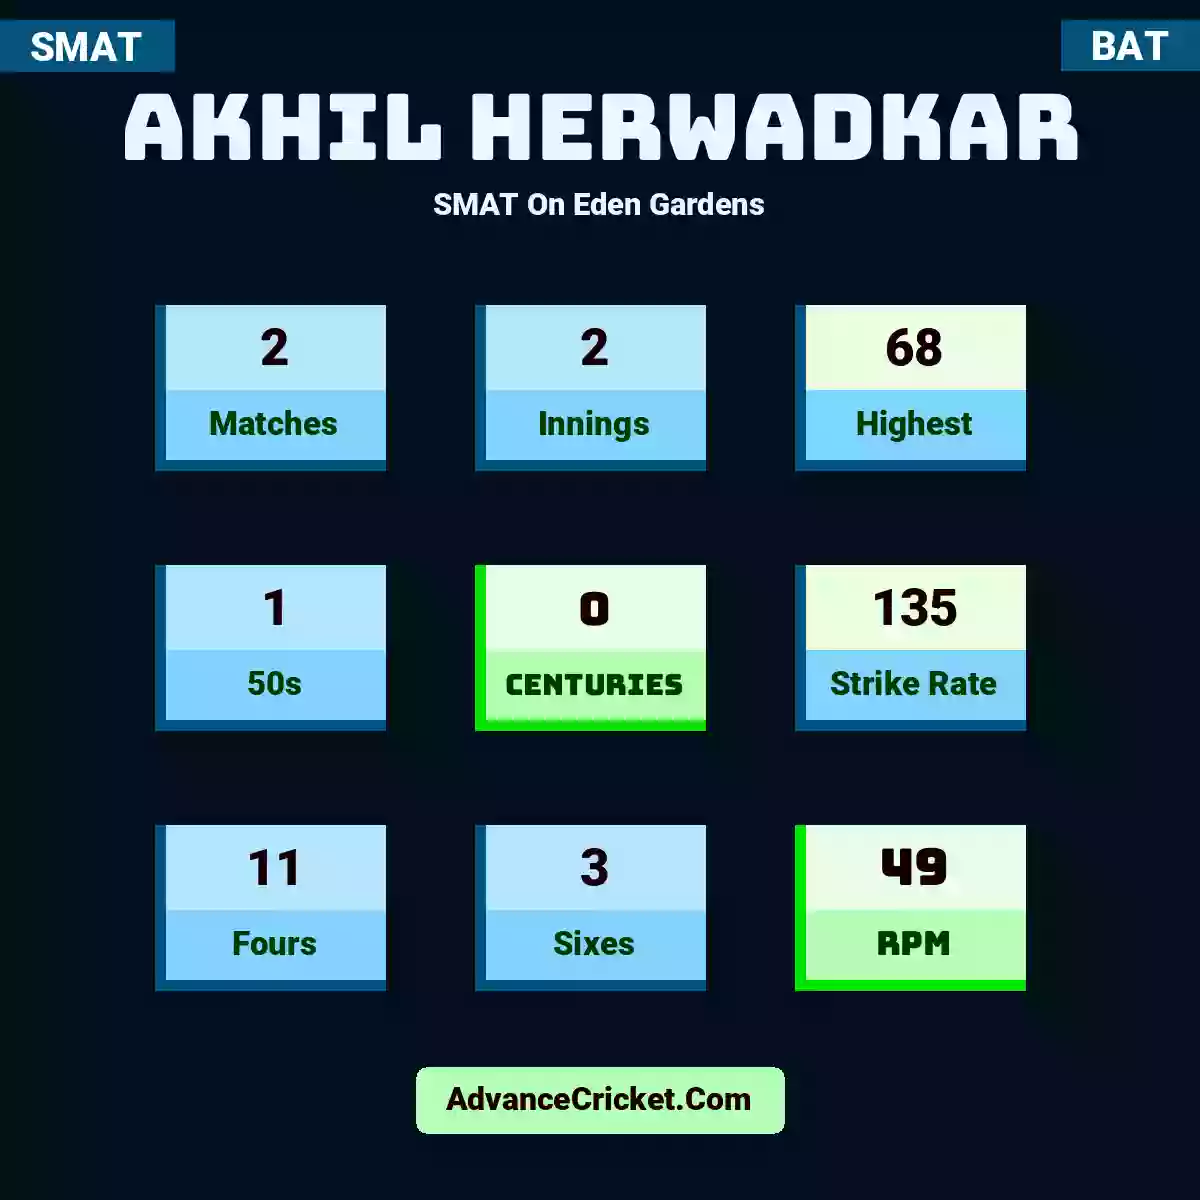 Akhil Herwadkar SMAT  On Eden Gardens, Akhil Herwadkar played 2 matches, scored 68 runs as highest, 1 half-centuries, and 0 centuries, with a strike rate of 135. A.Herwadkar hit 11 fours and 3 sixes, with an RPM of 49.